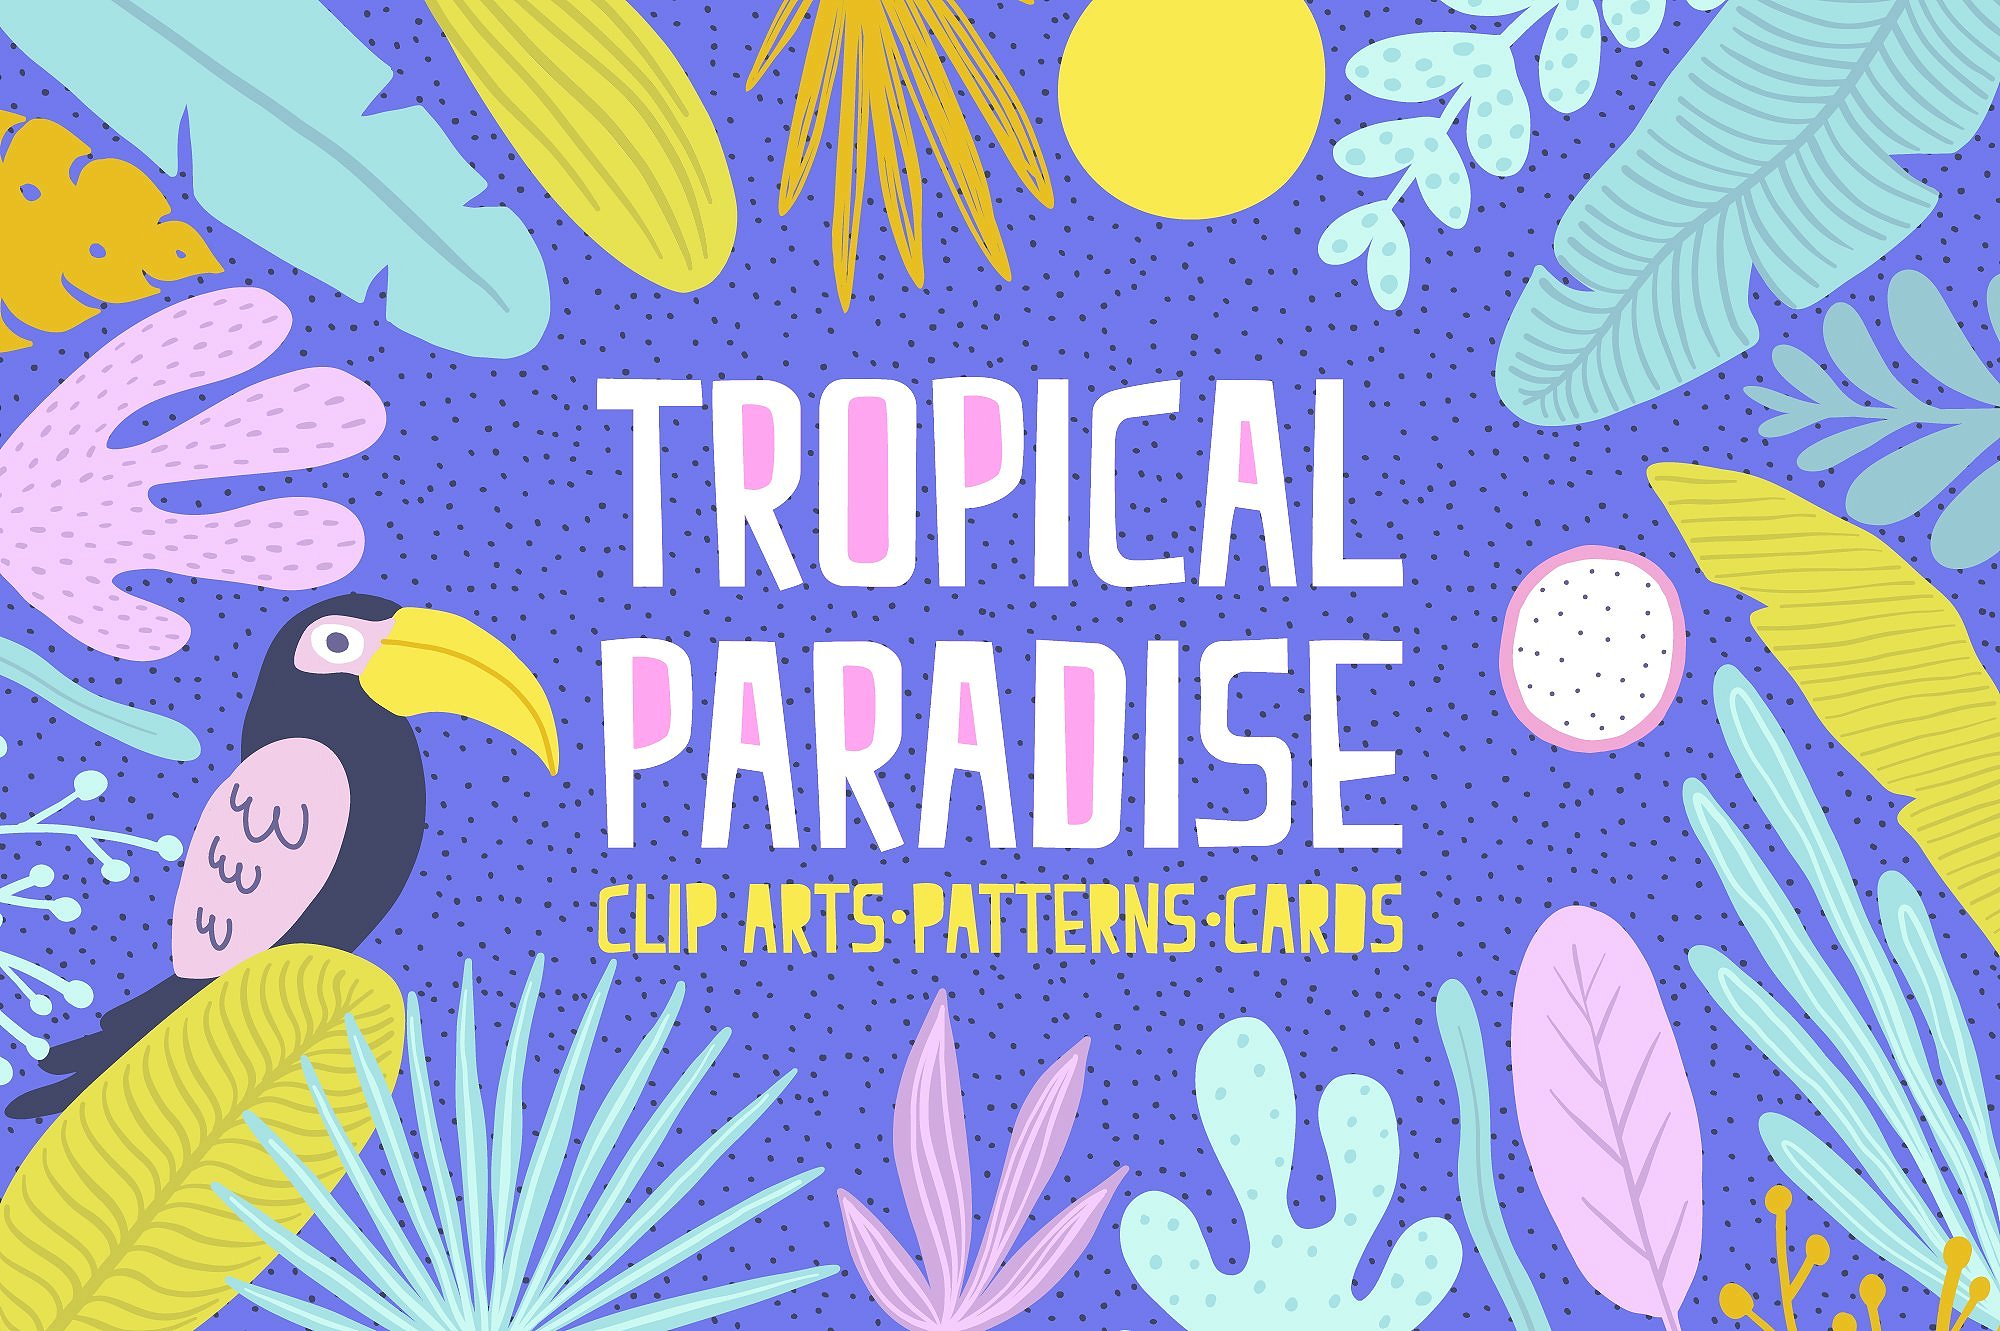 热带天堂夏季矢量动植物图案套装 Tropical Paradise Summer Vector Animal and Plant Pattern Set插图